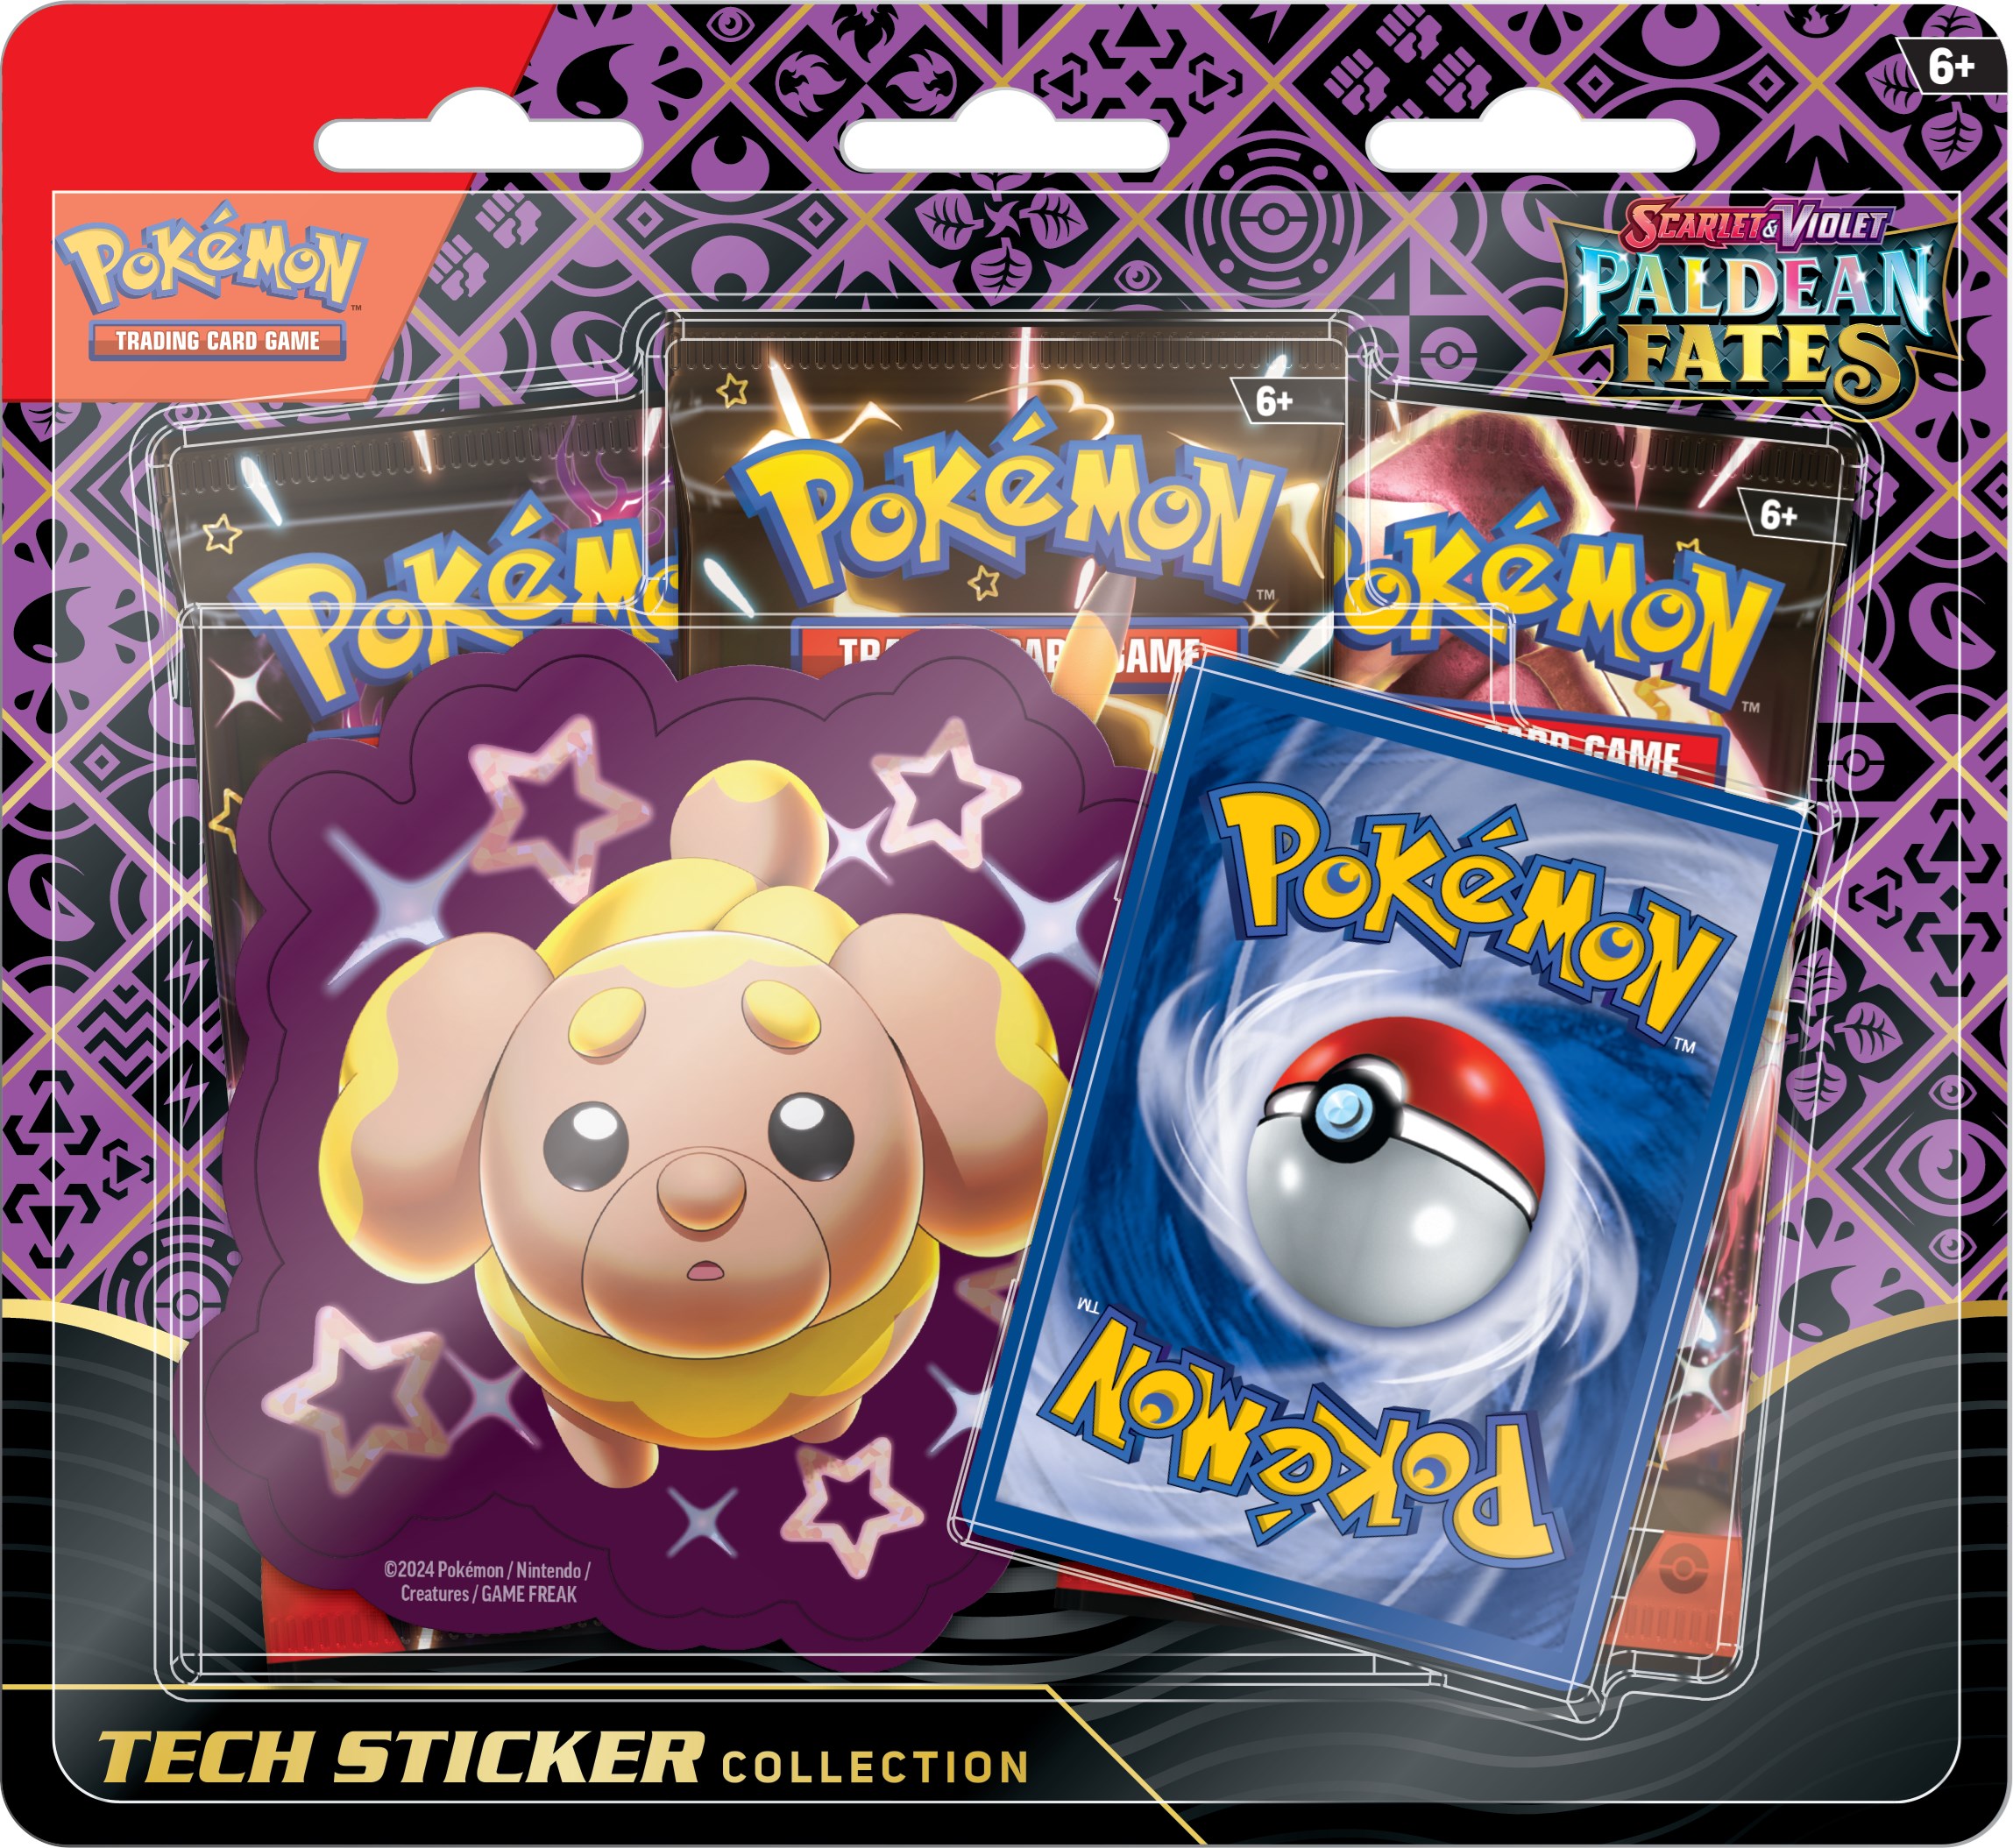 Pokémon TCG Violet Écarlate%E2%80%94Paldean Fates Tech Sticker Collection Fidough png jpgcopy